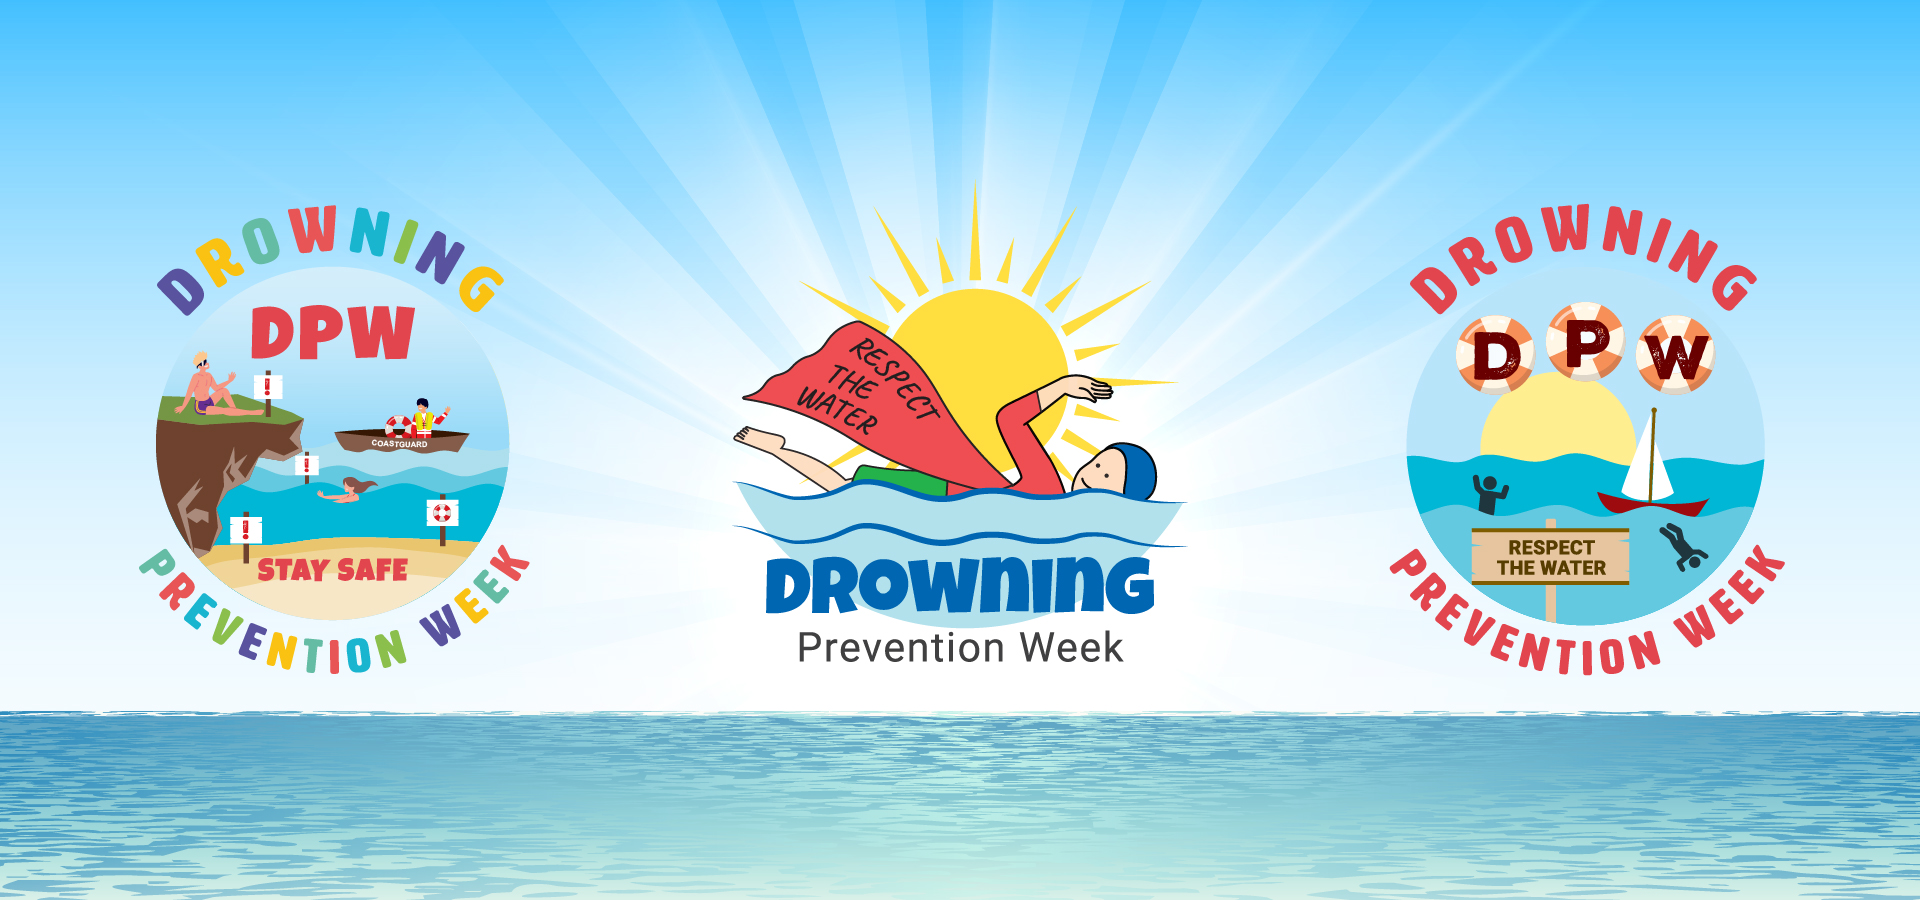 Drowning Prevention Week logos